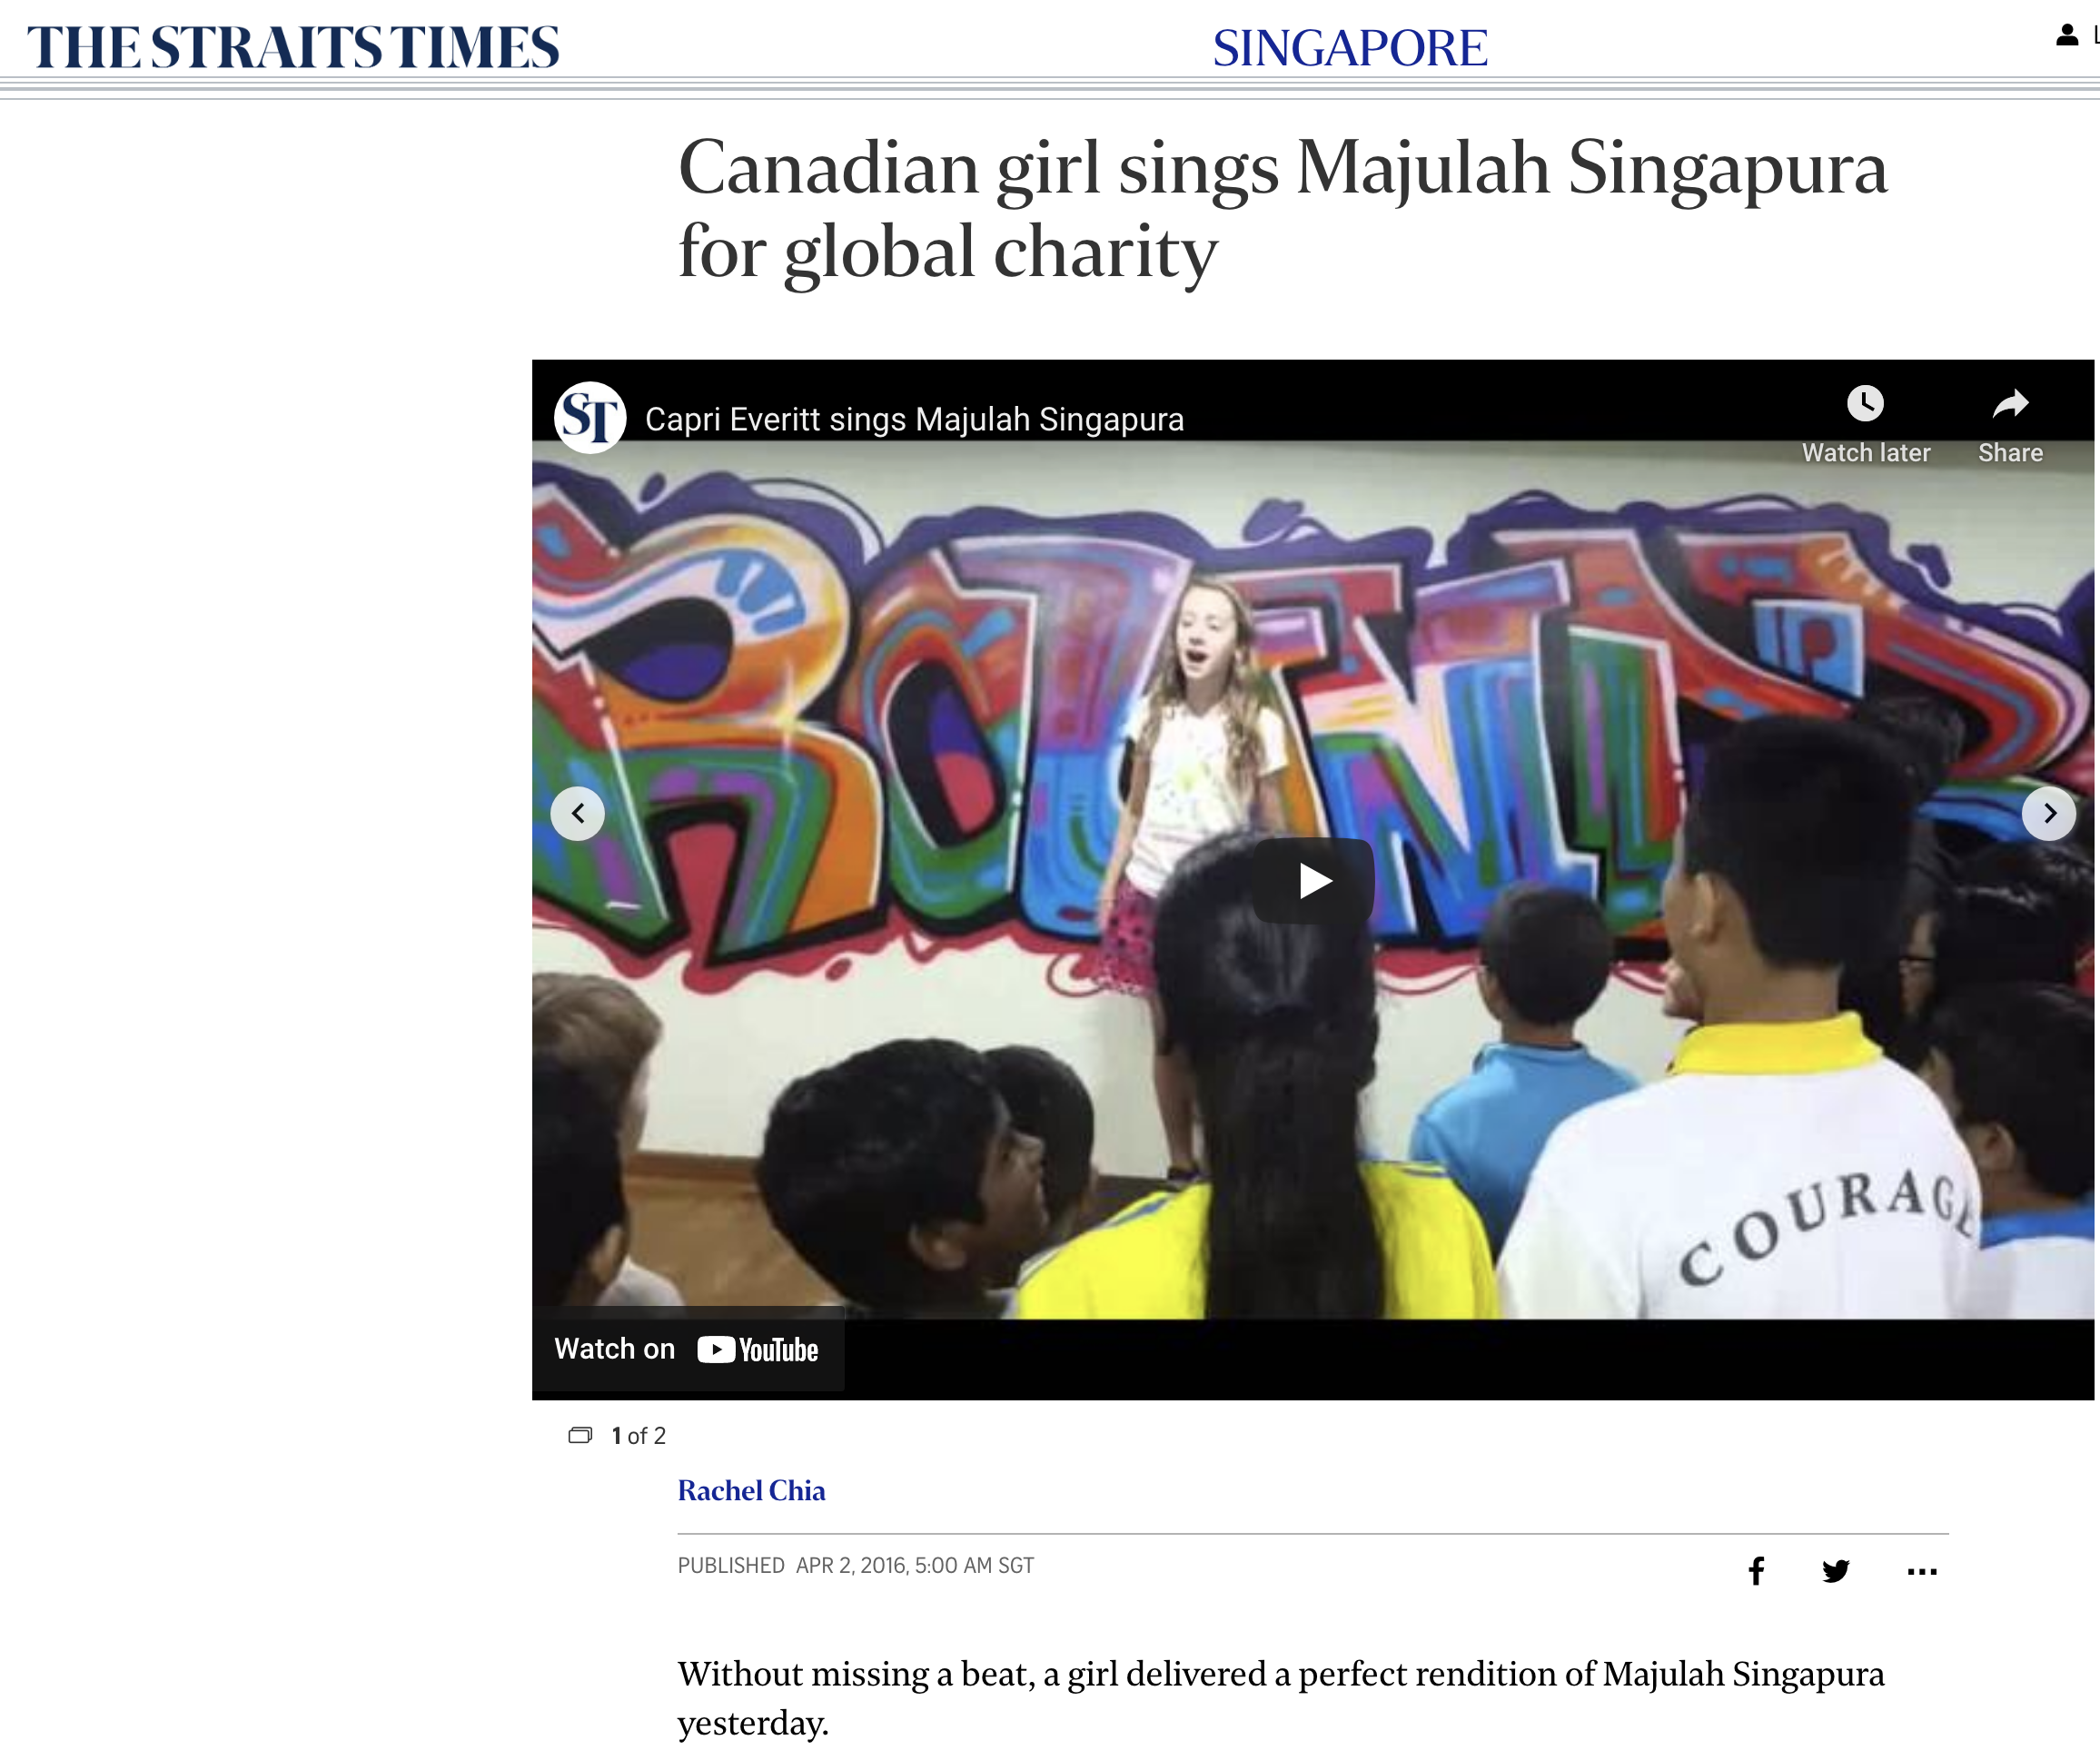 Singapore: The Strait Times